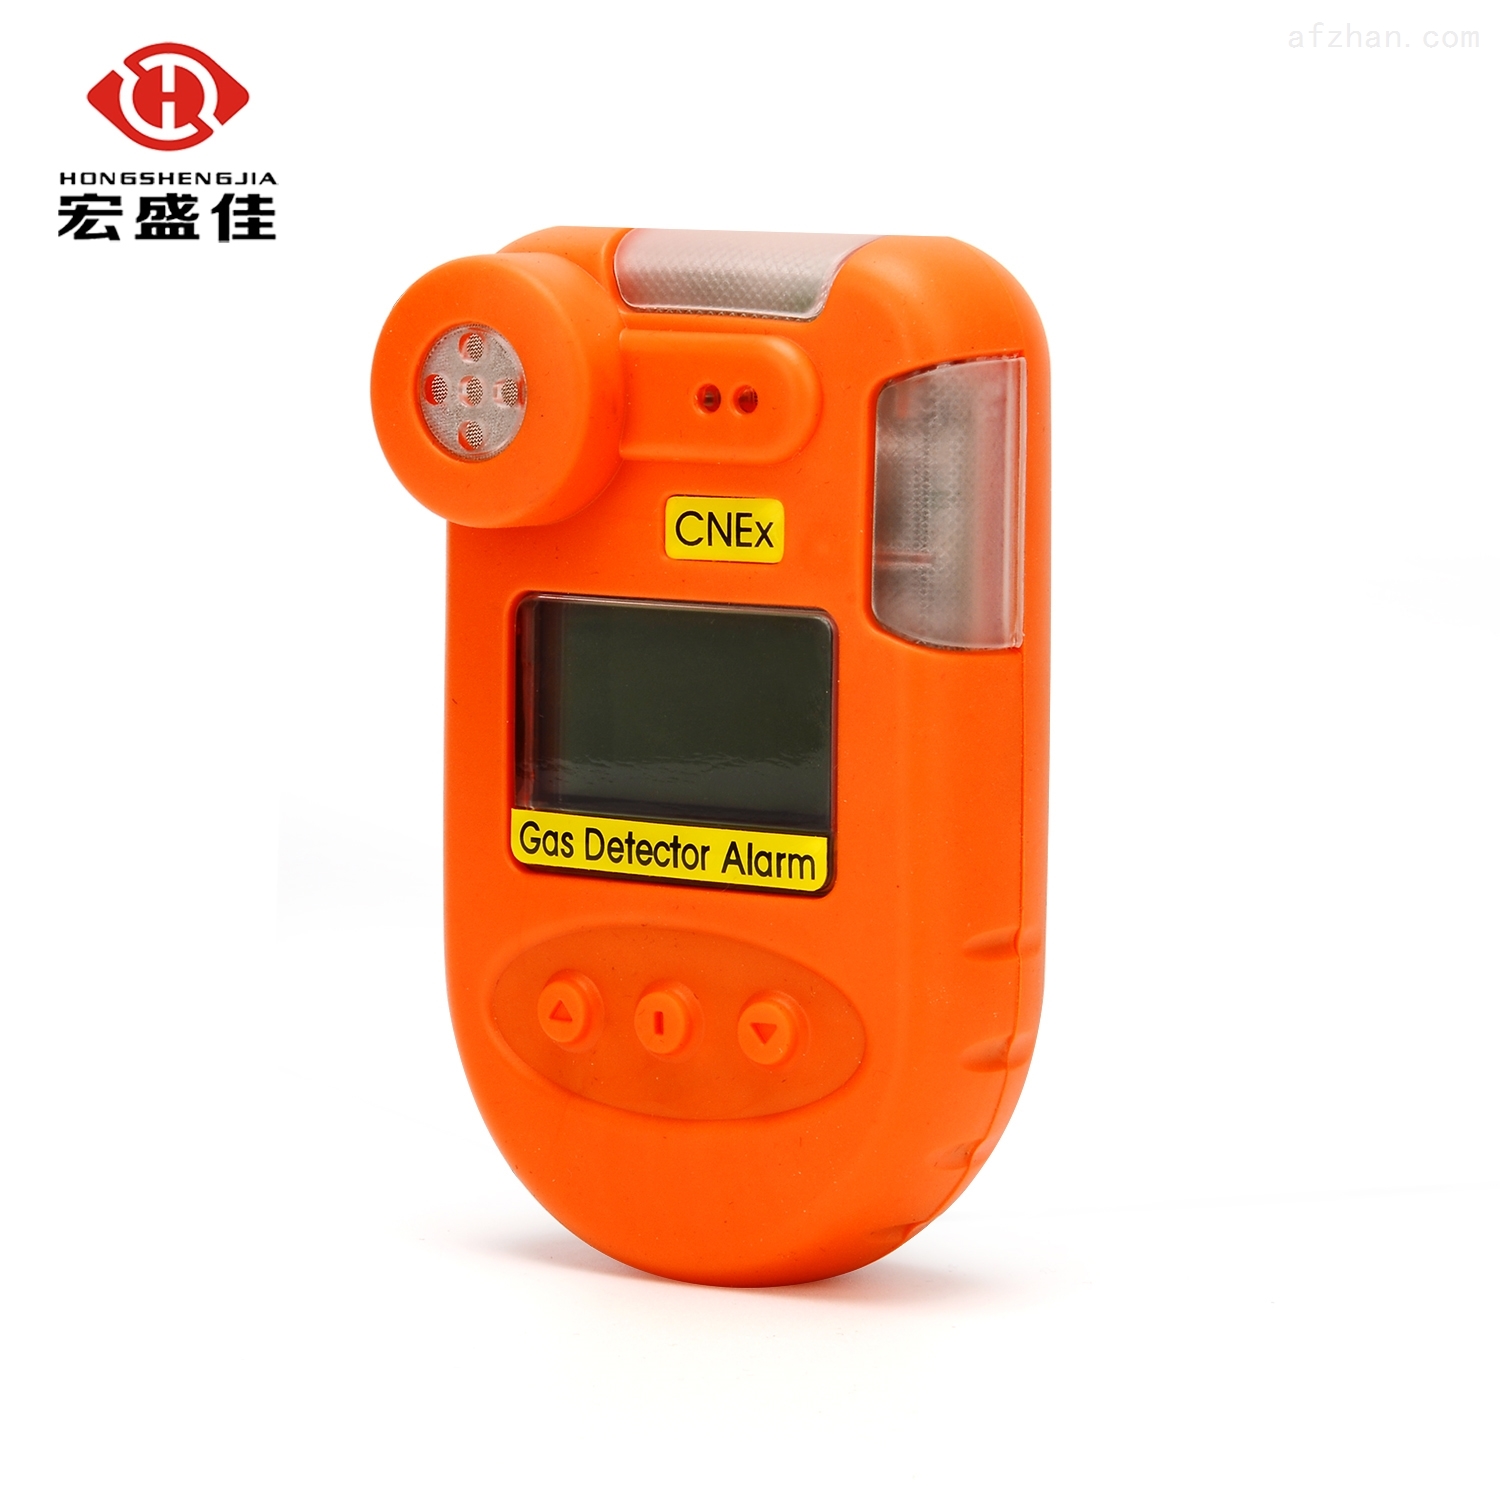 HA-850便携式氧气浓度探测器厂家/价格/品牌/参数